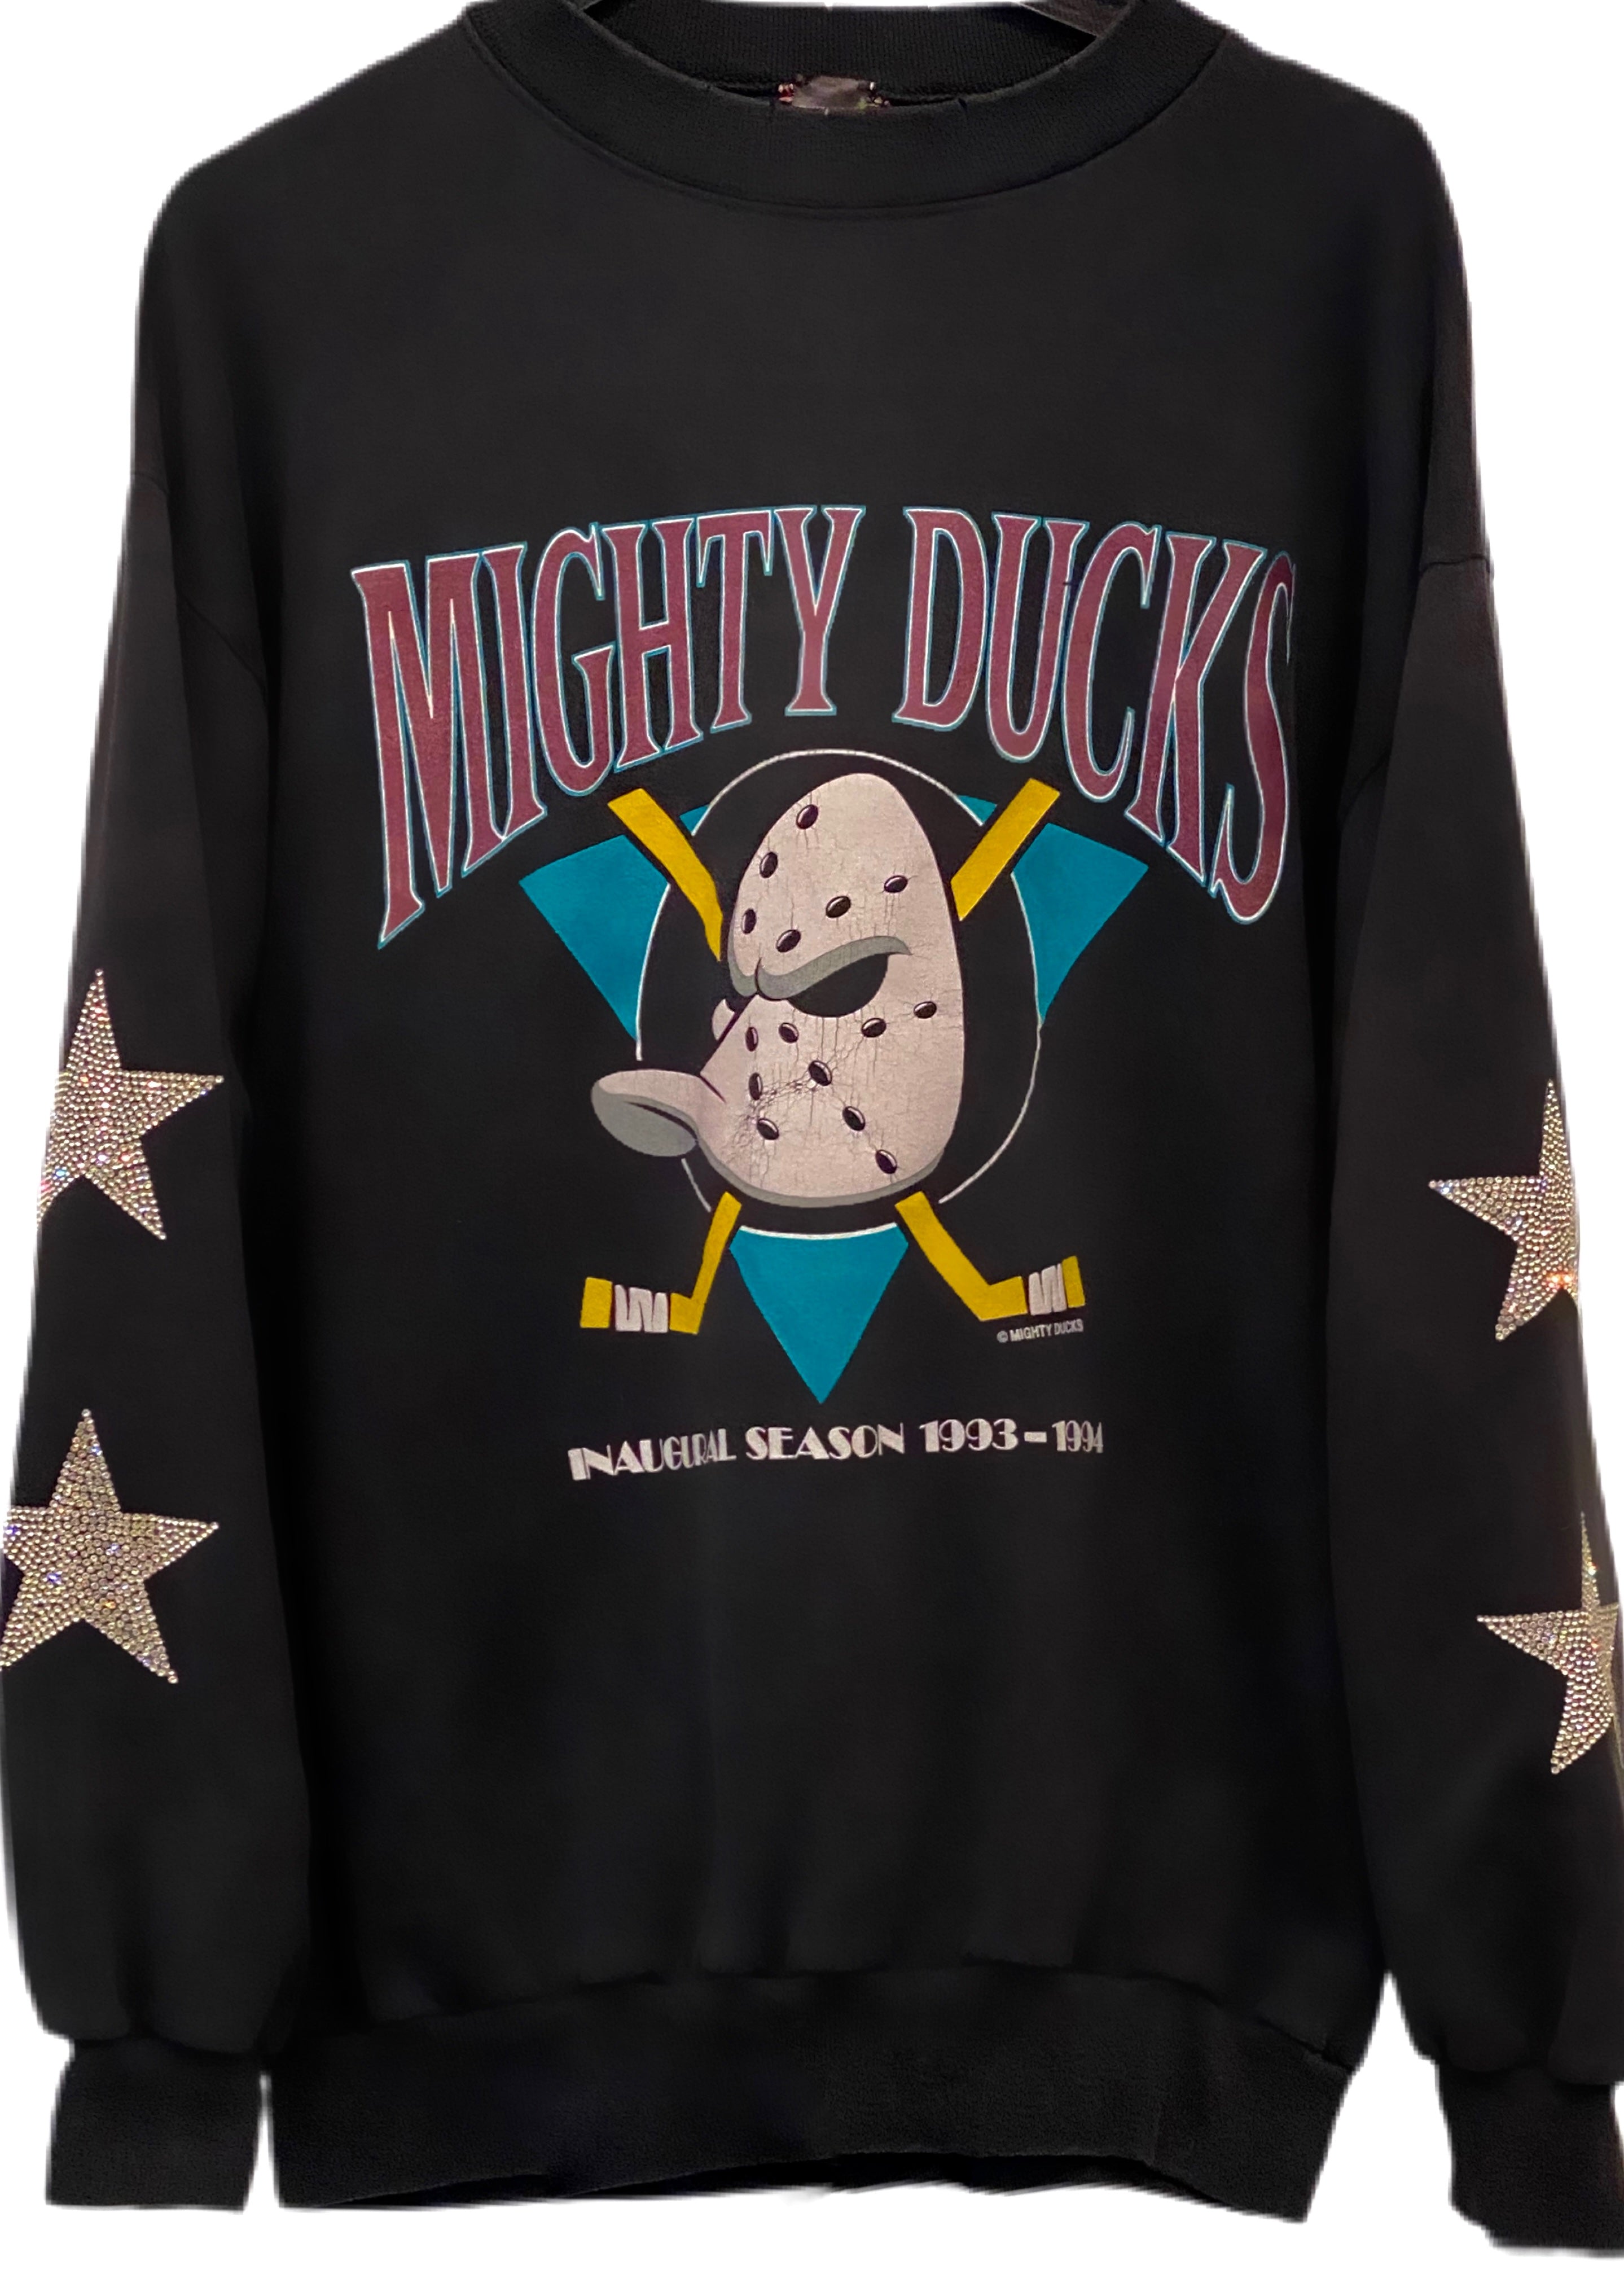 Anaheim Ducks, NHL One of a KIND “Rare Find” Vintage Mighty Ducks